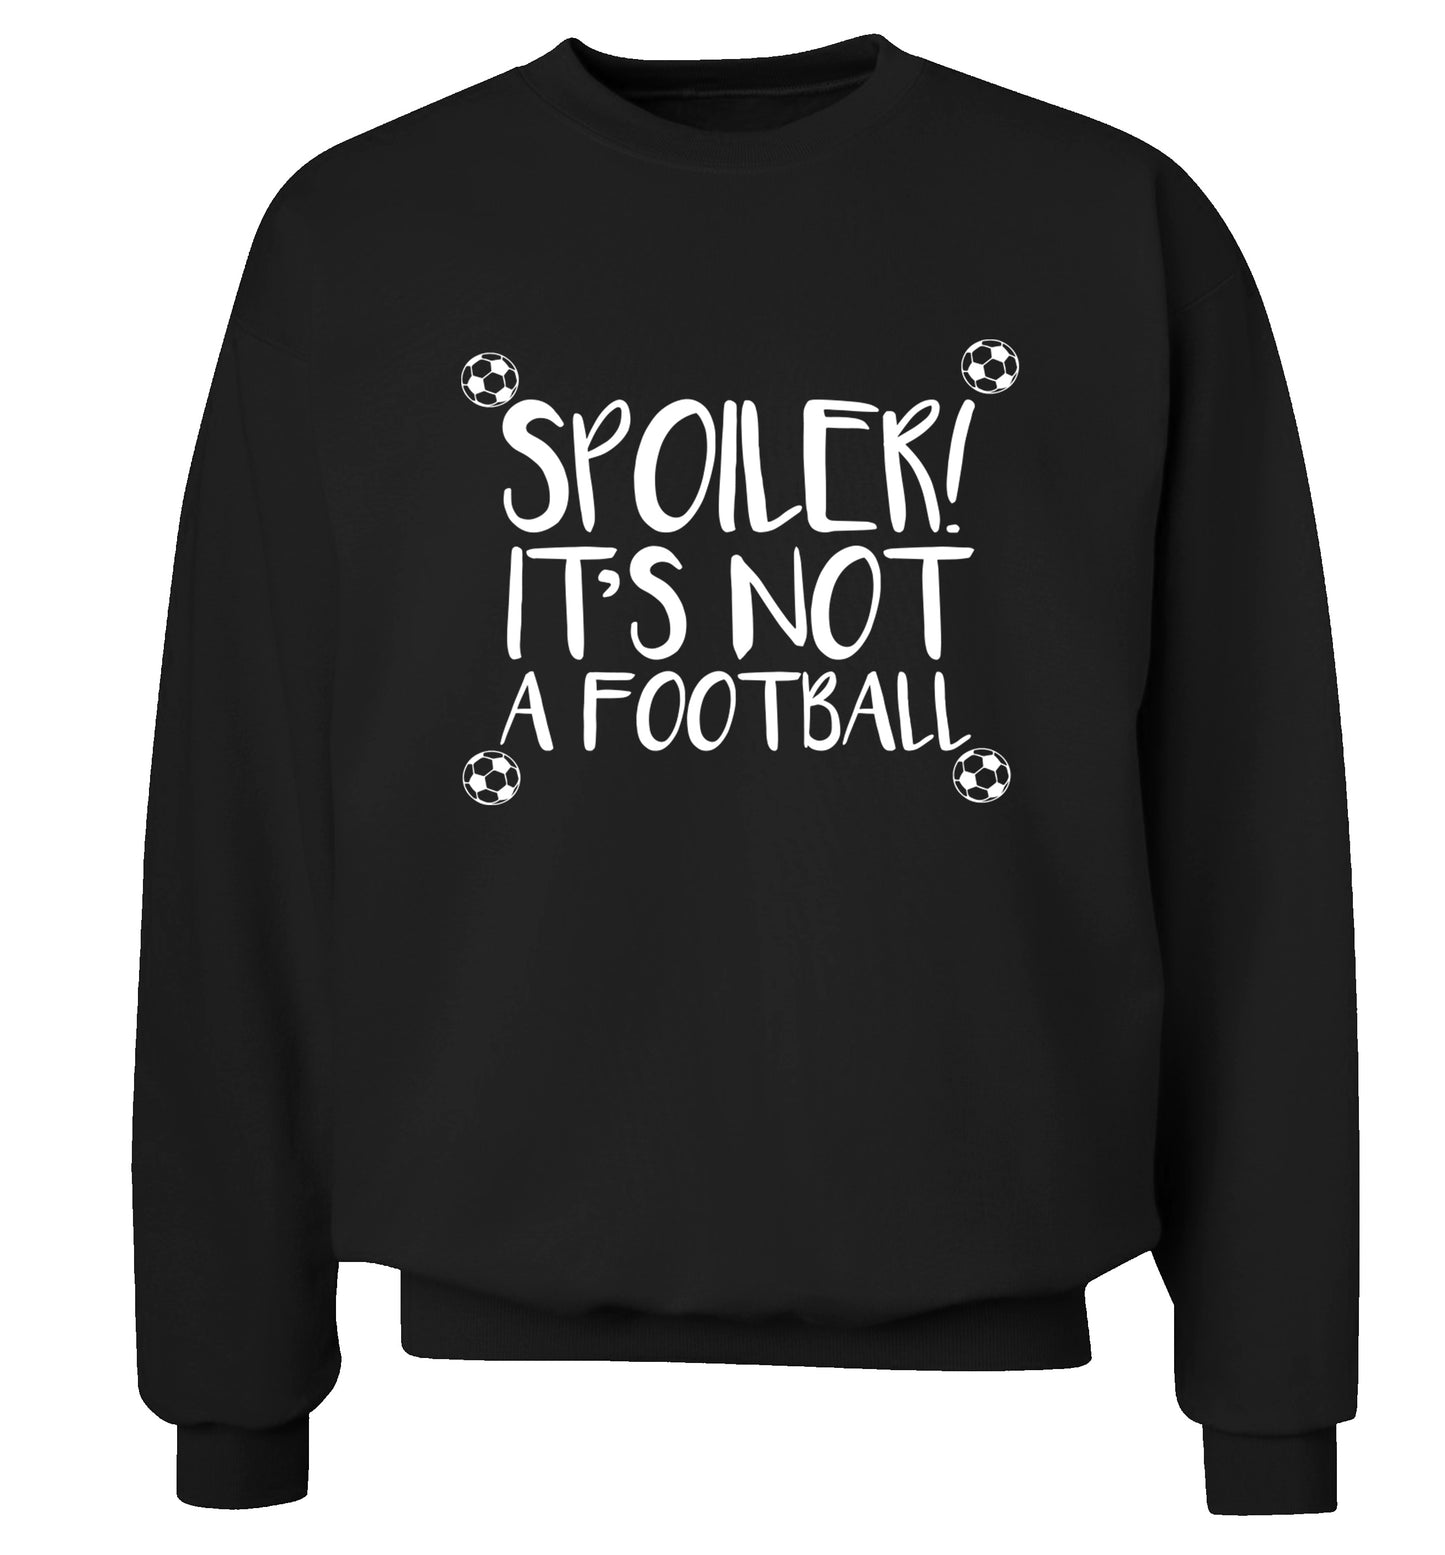 Spoiler it's not a football Adult's unisex black Sweater 2XL